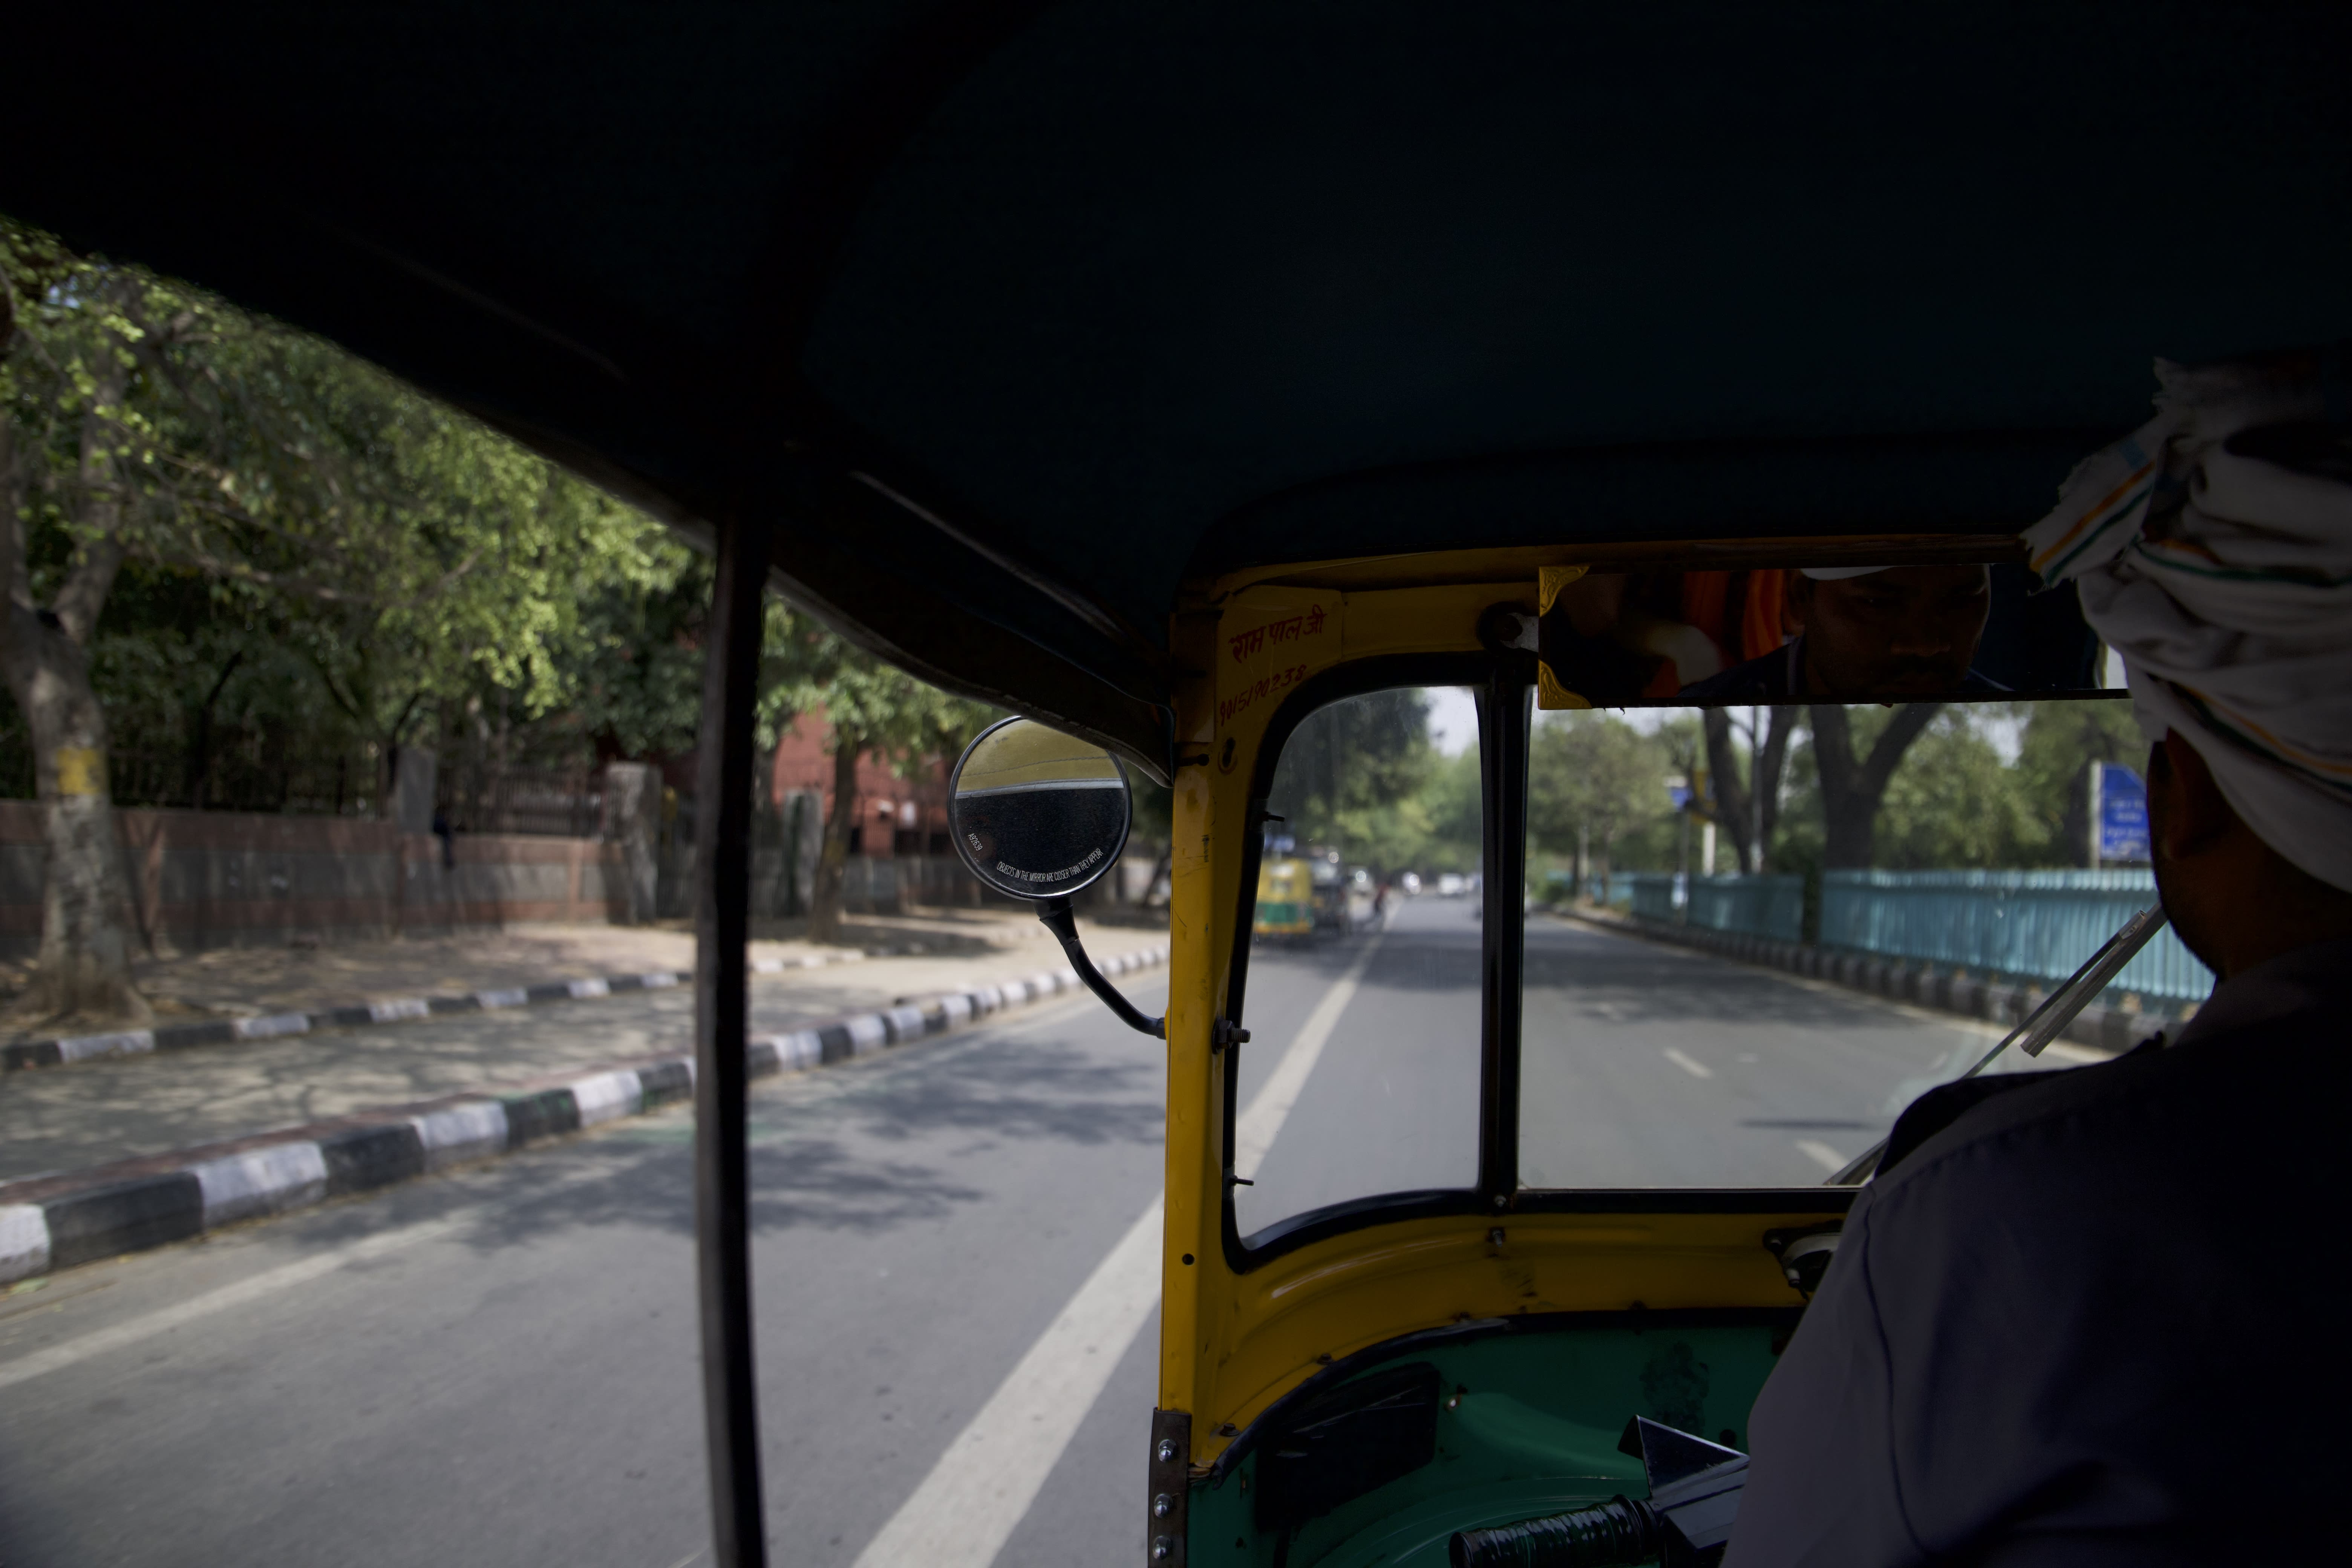 rickshaw in india